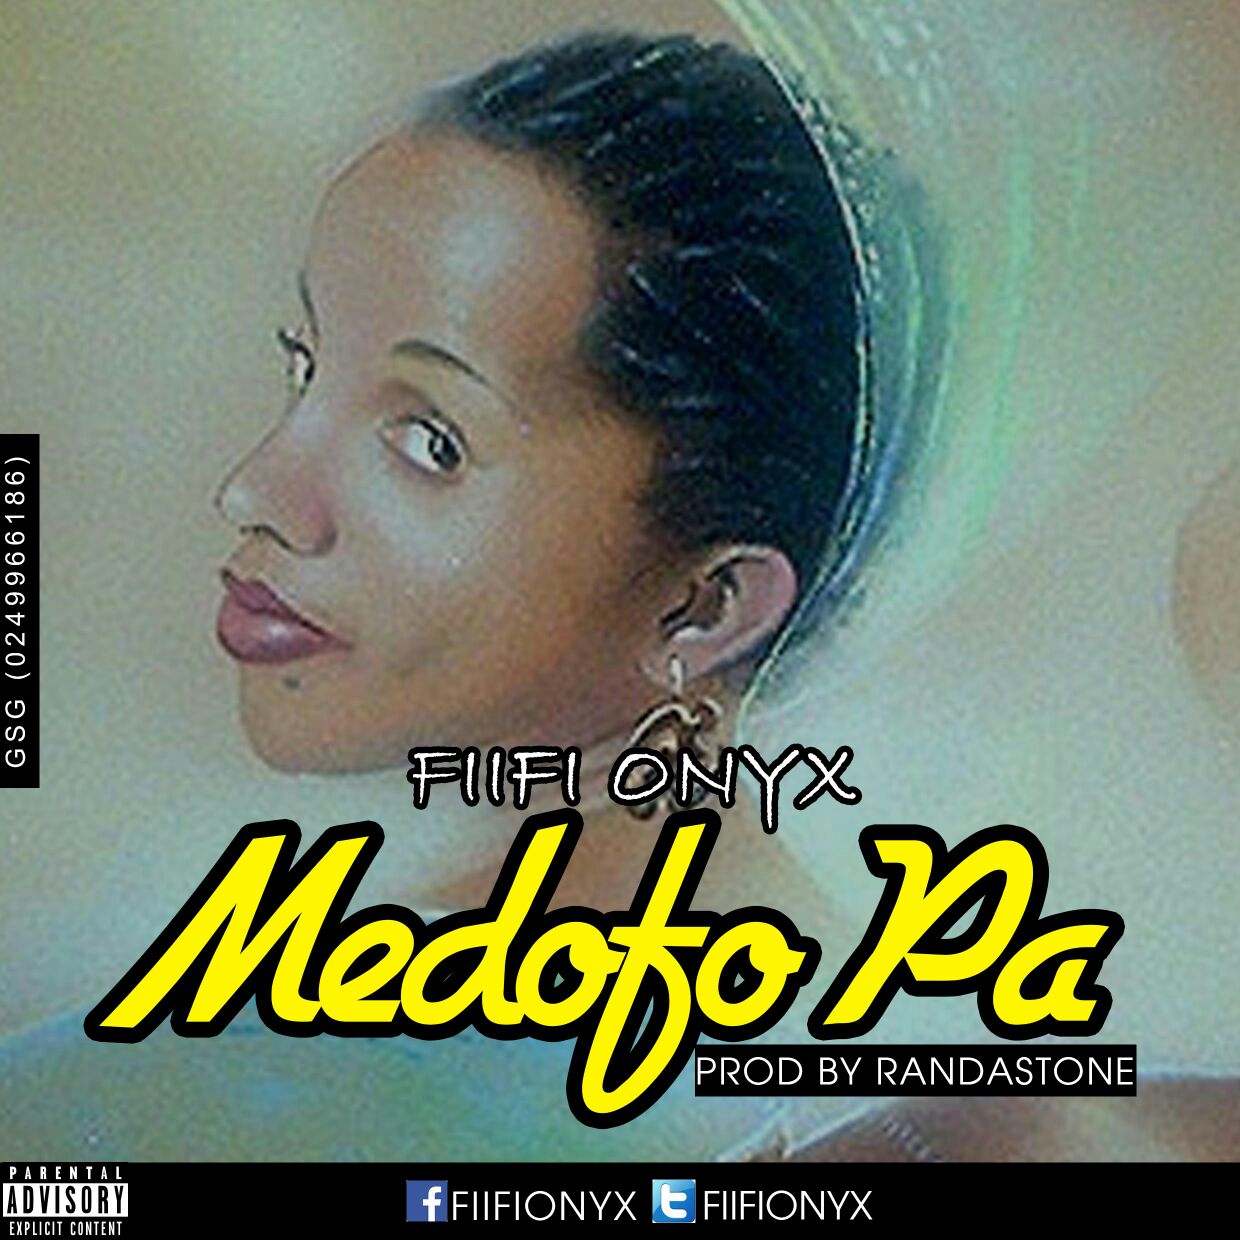 Fiifi Onyx – Medofo Pa (prod. Randastone )